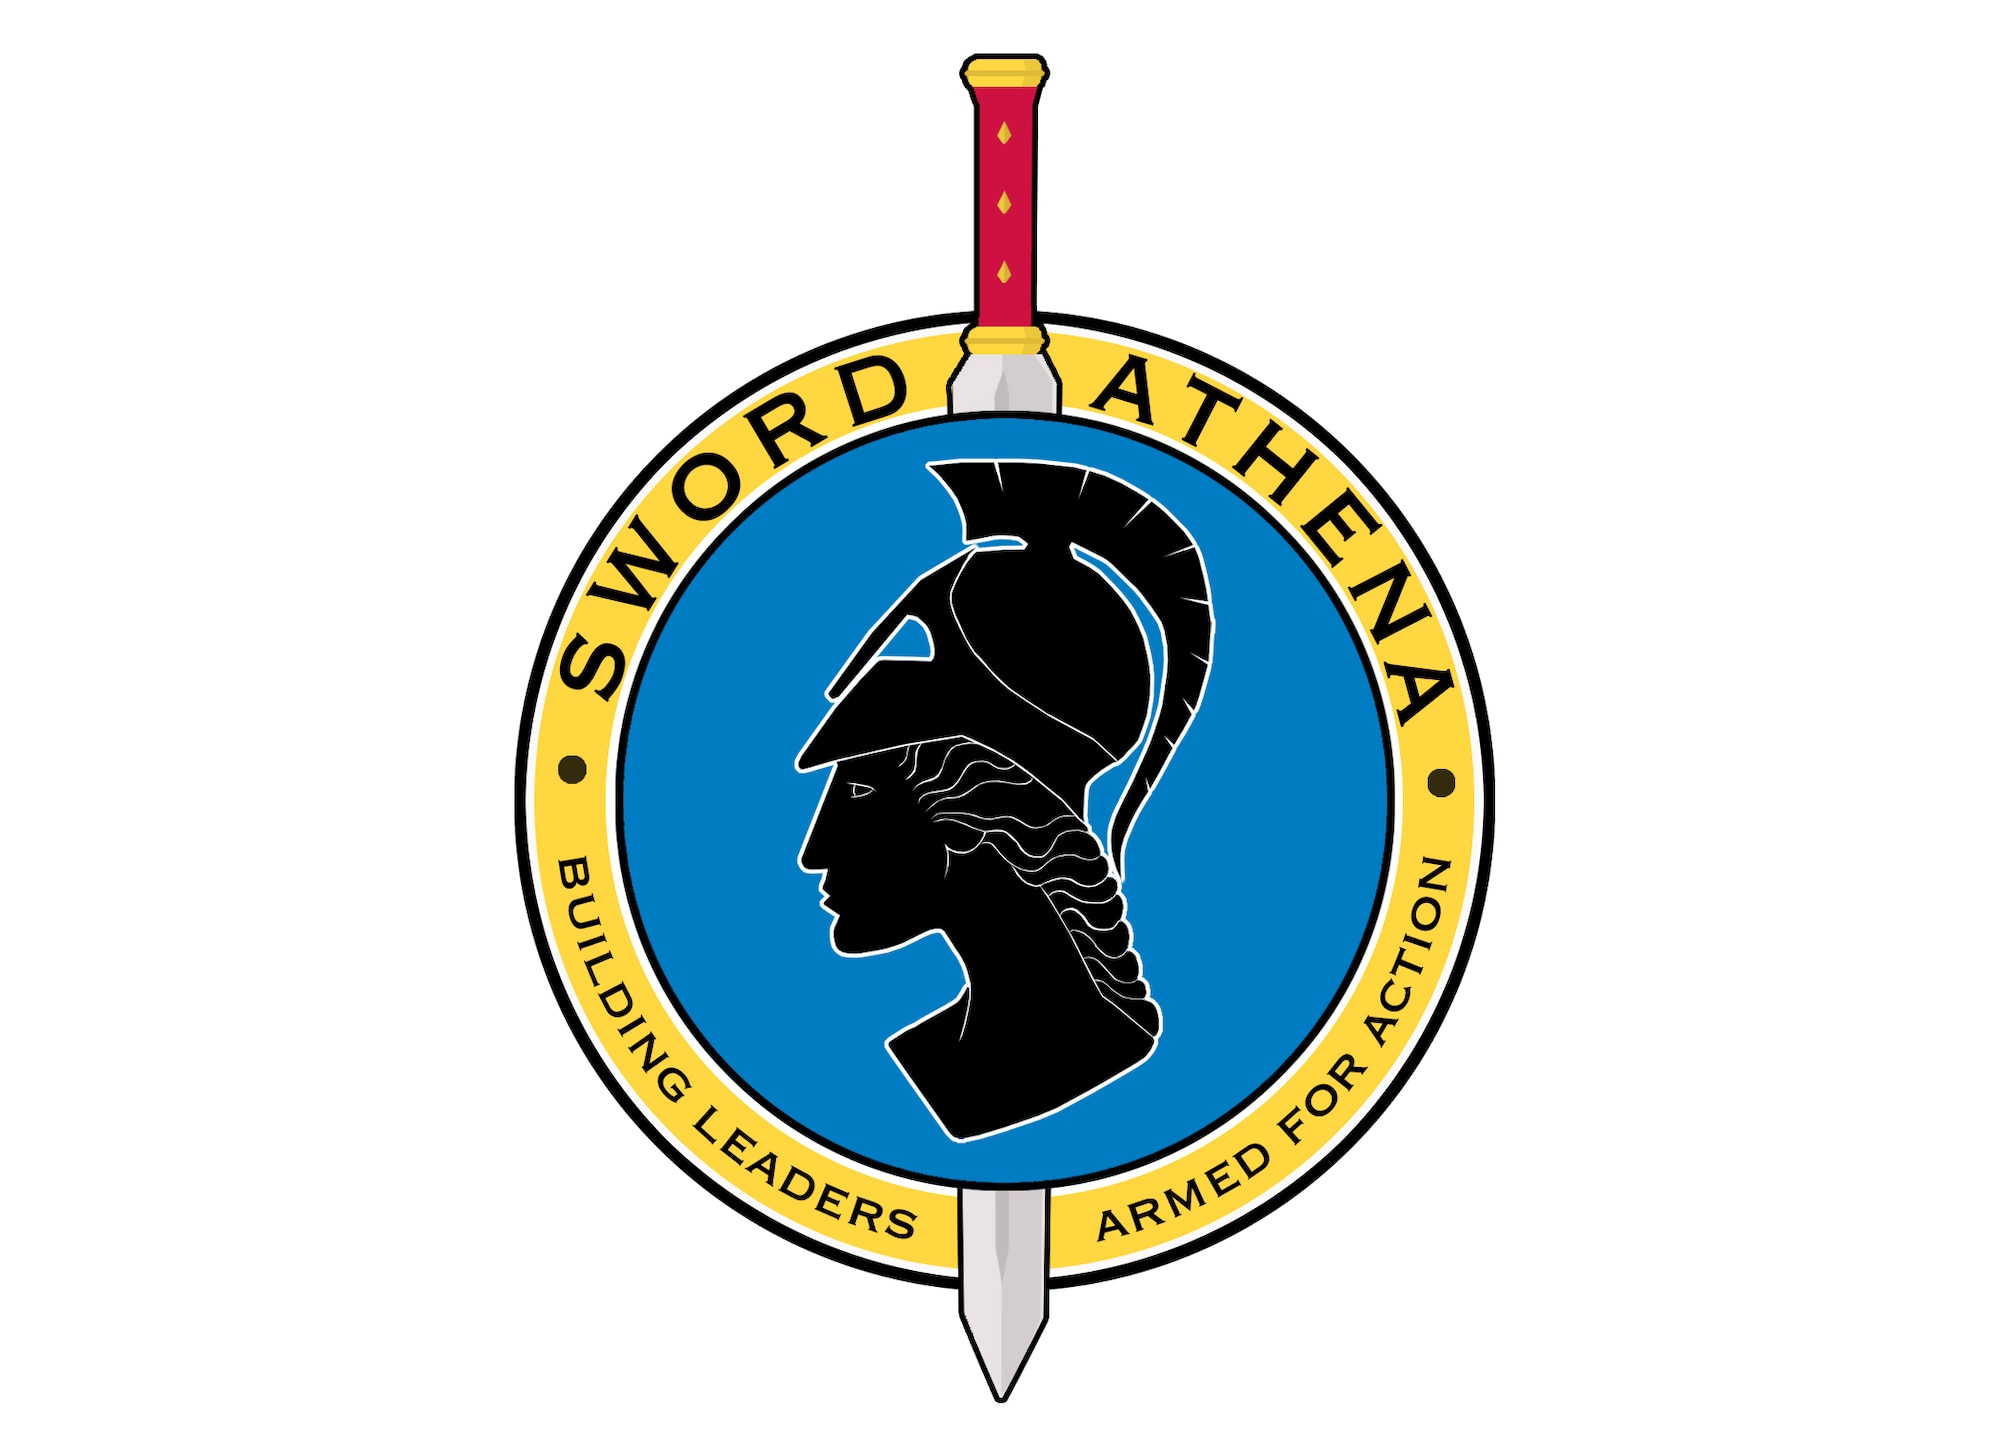 Sword Athena 2021 Graphics